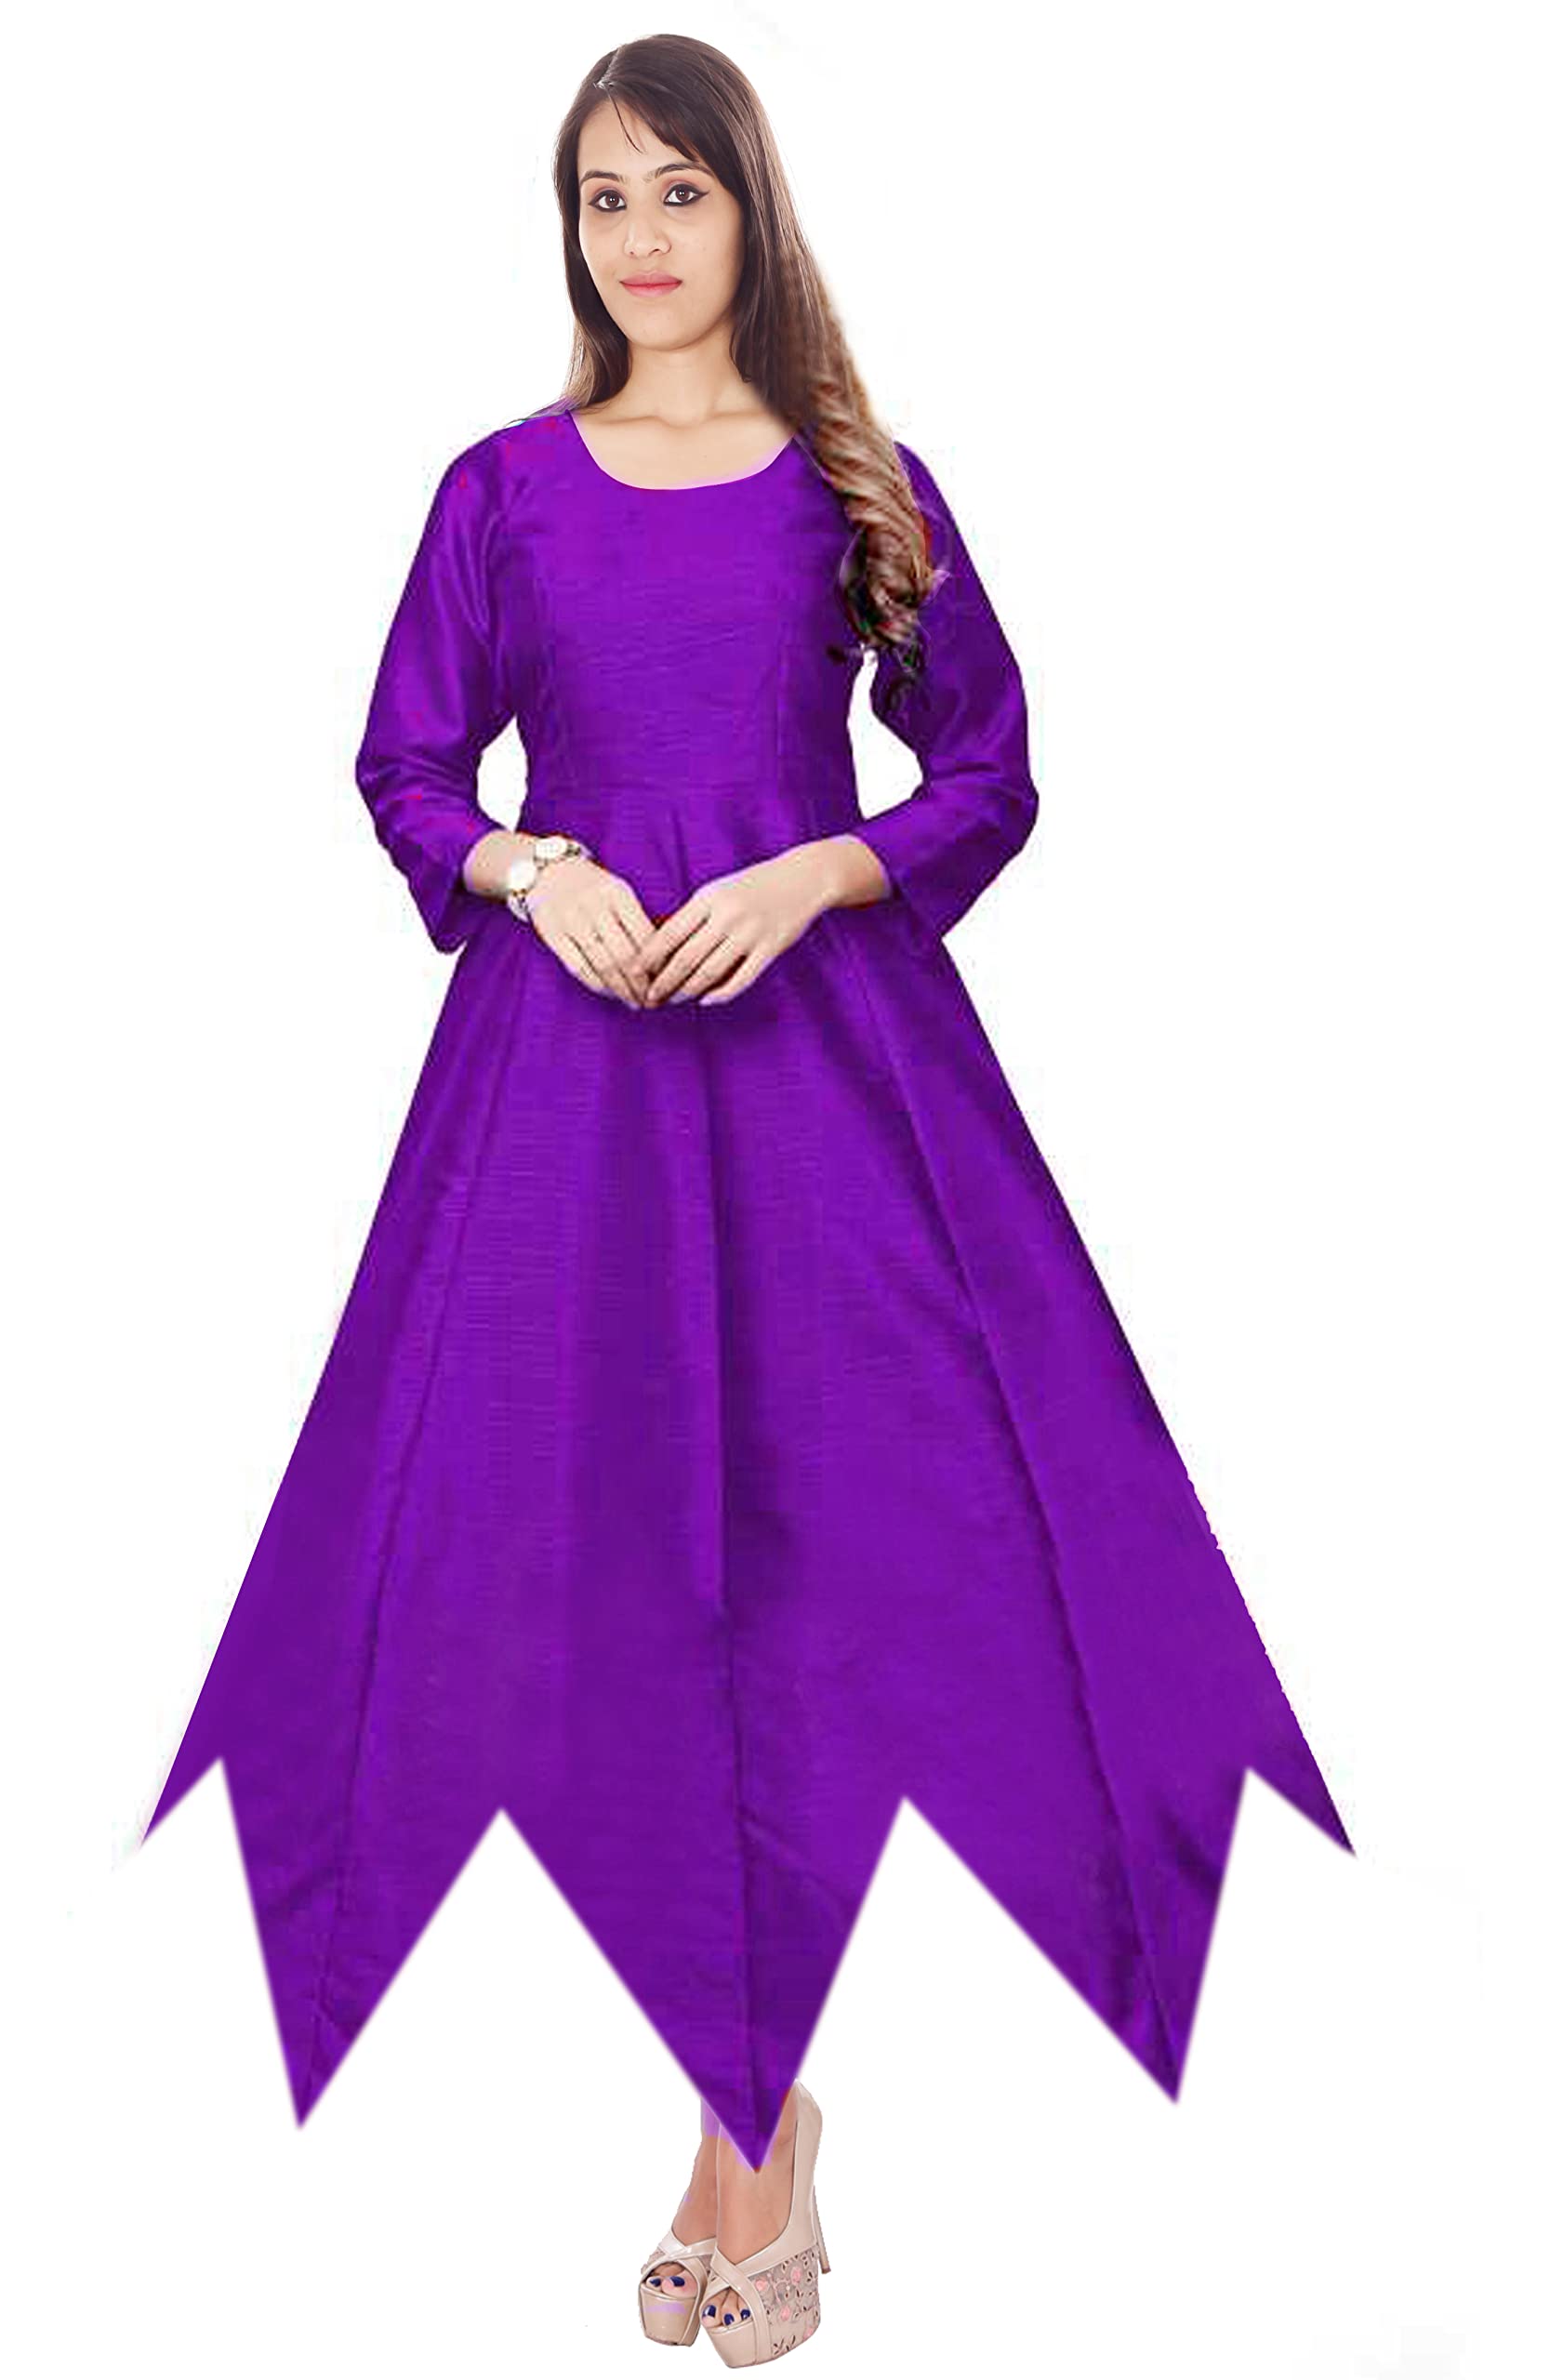 Lakkar haveli Beautiful Women's Tunic Art Dupien Poly Silk Handkerchief Dress Top Casual Frock Suit Purple Color Wedding Wear Plus Size (3XL)